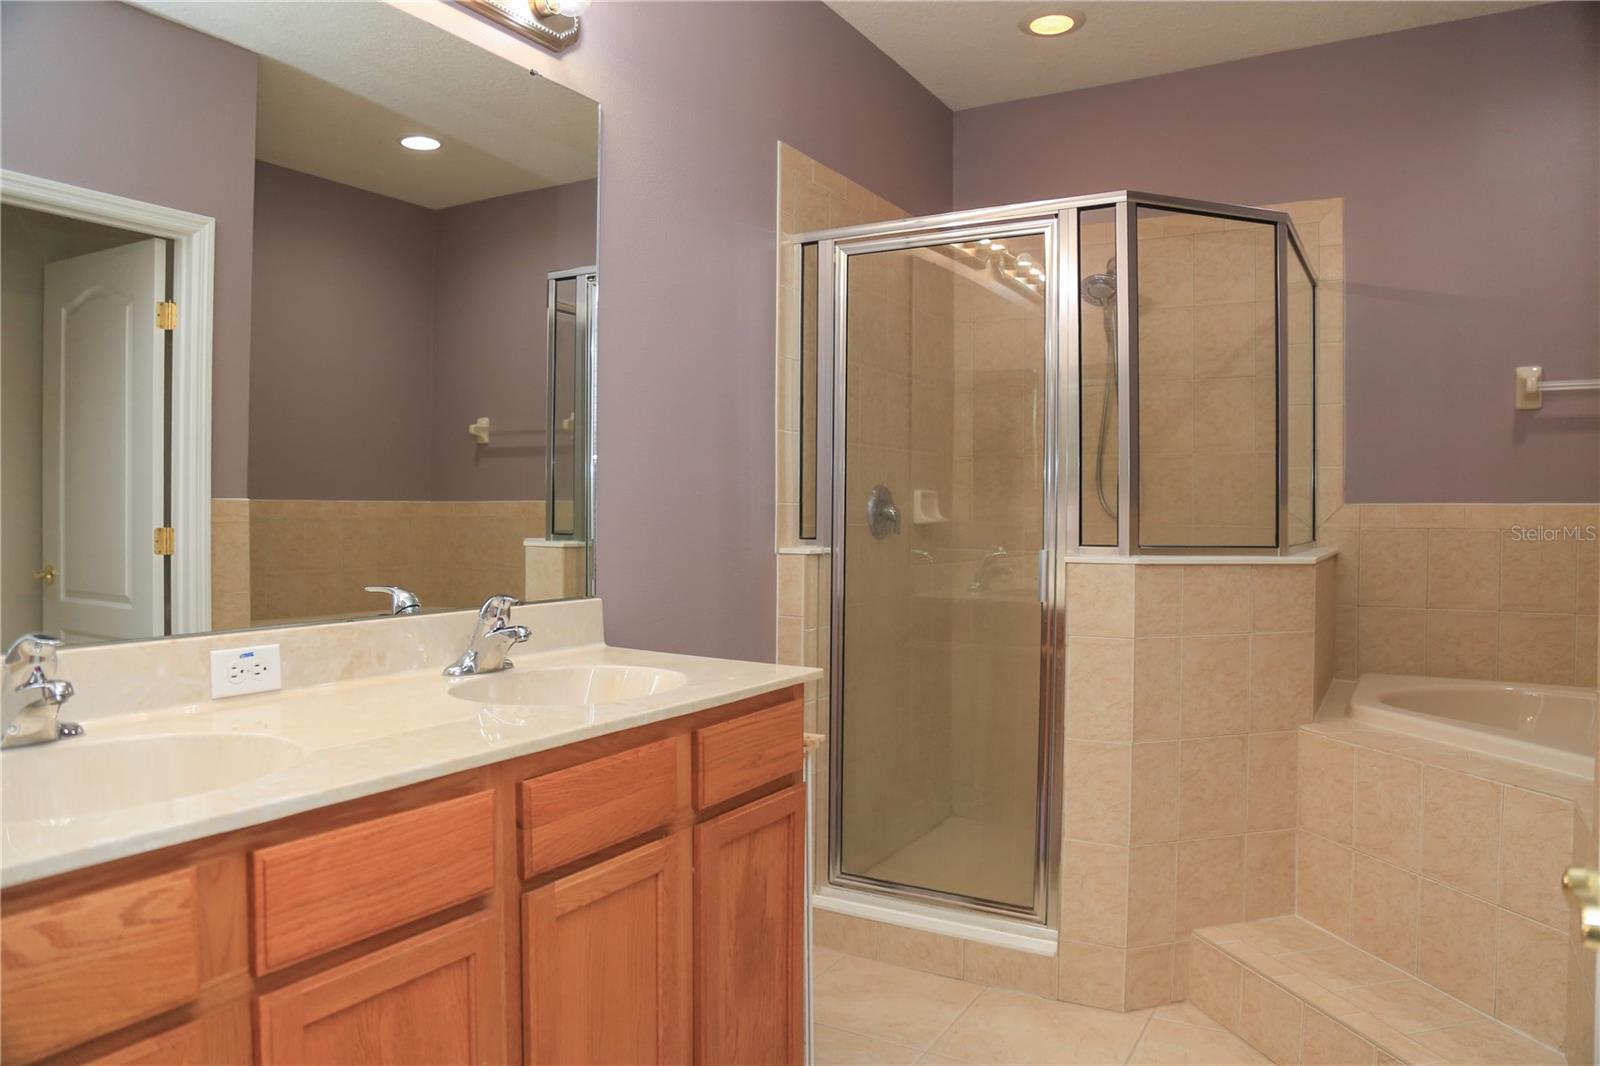 Master bathroom features dual sink vanities, cultured marble countertops, separate shower & Garden tub